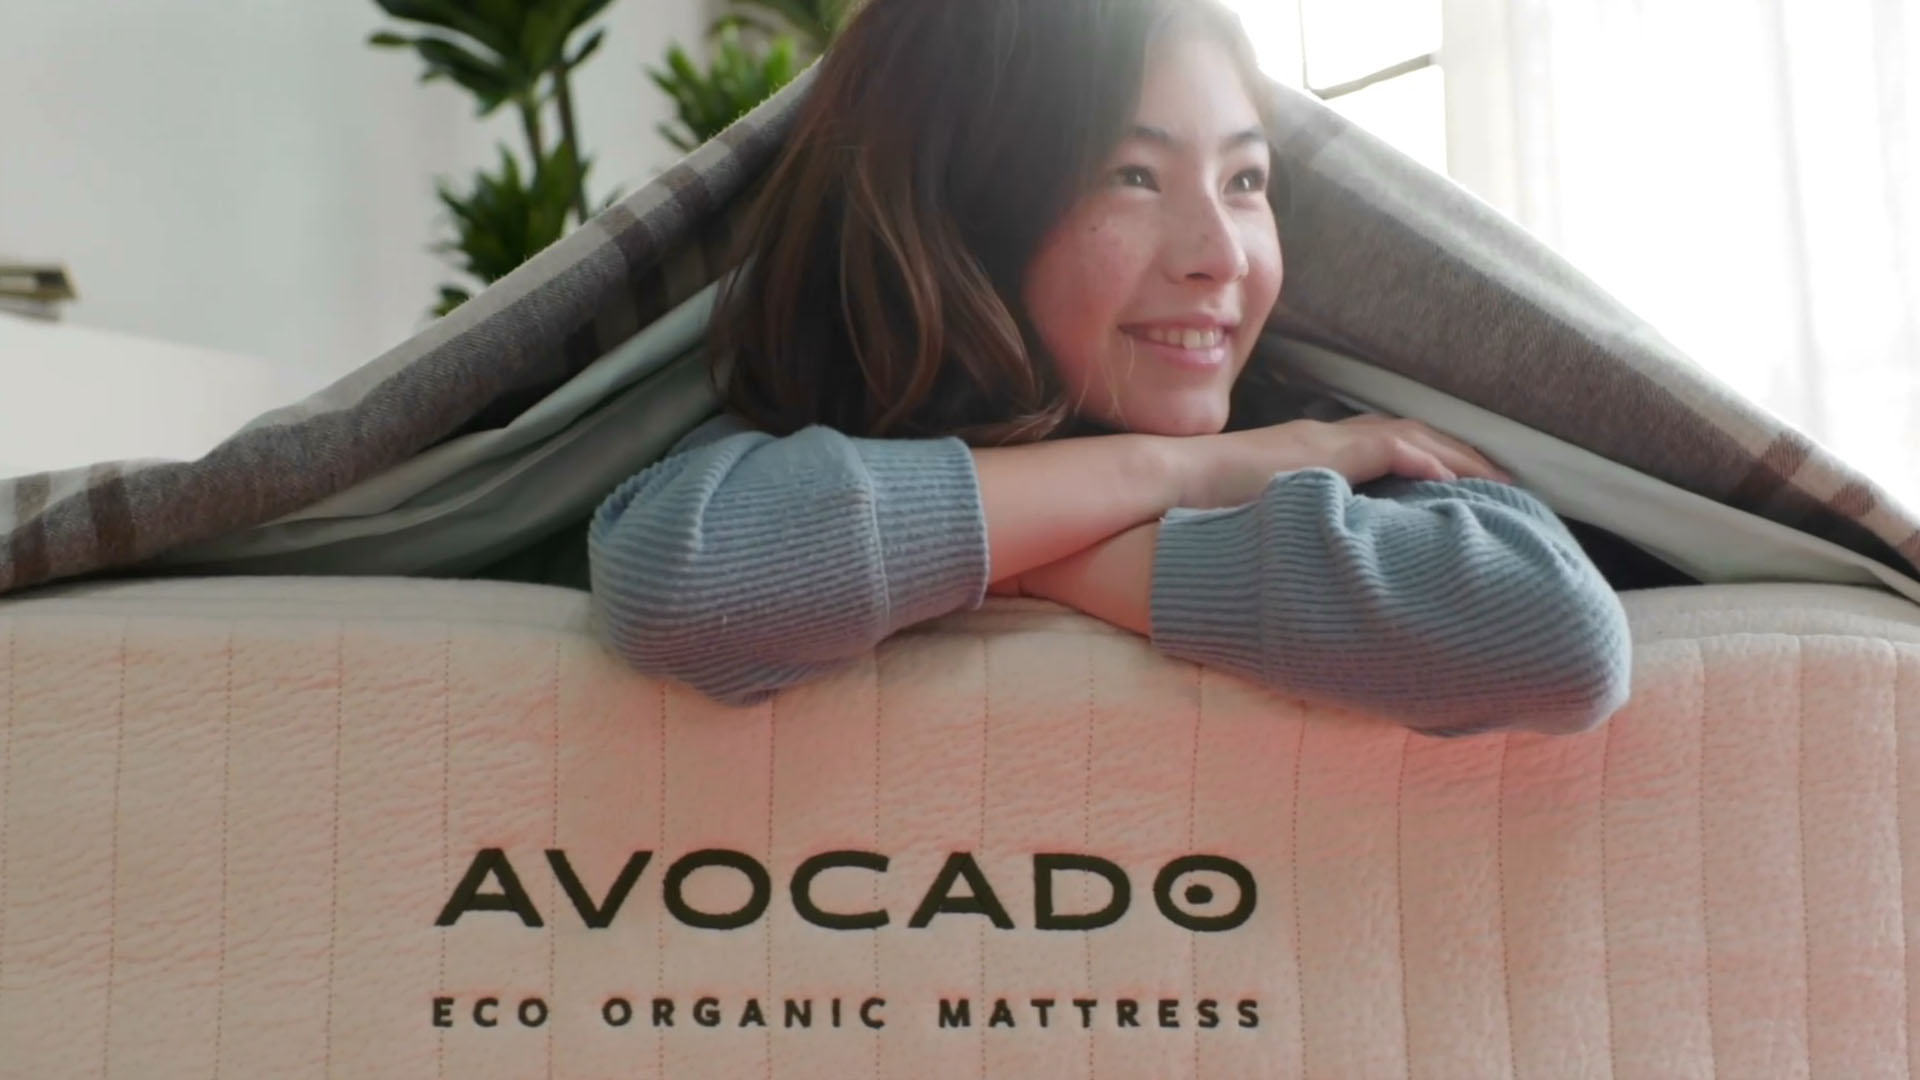 Who sells Avocado mattress near me in Corona